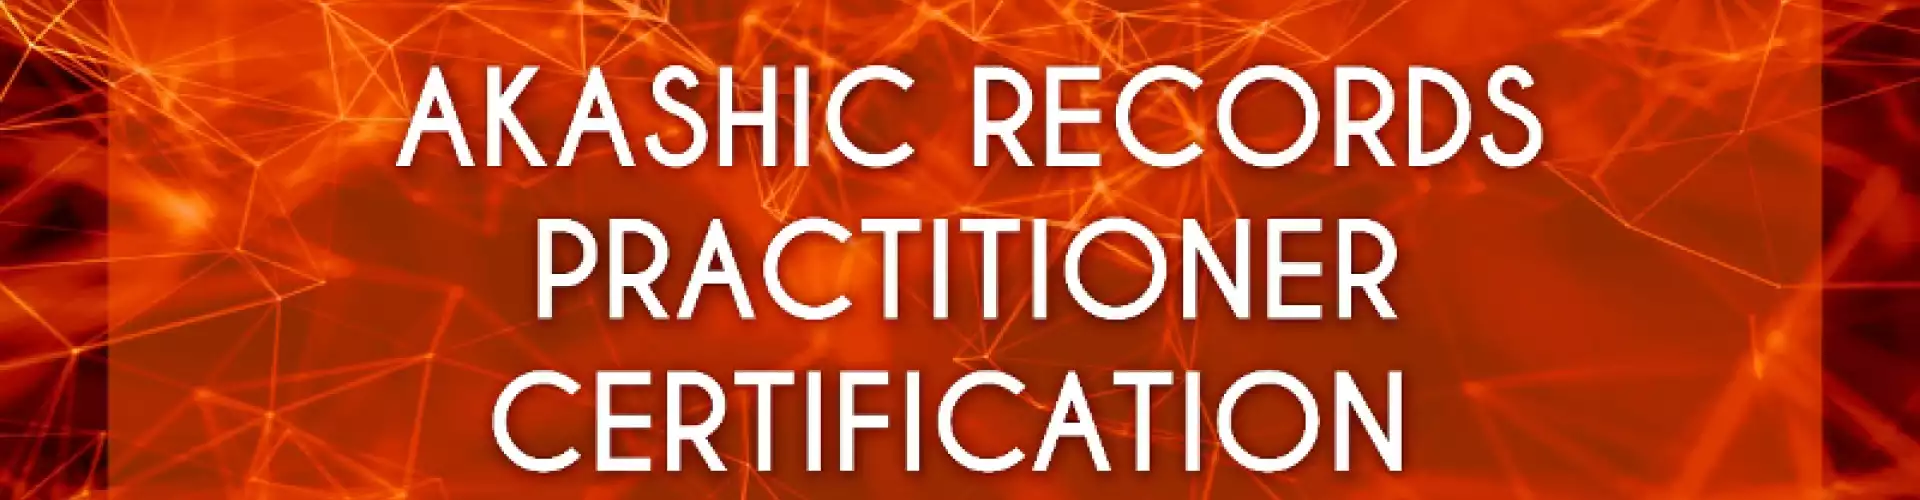 Akashic Records Practitioner Certification - January 8, 2021 - Amy Mak